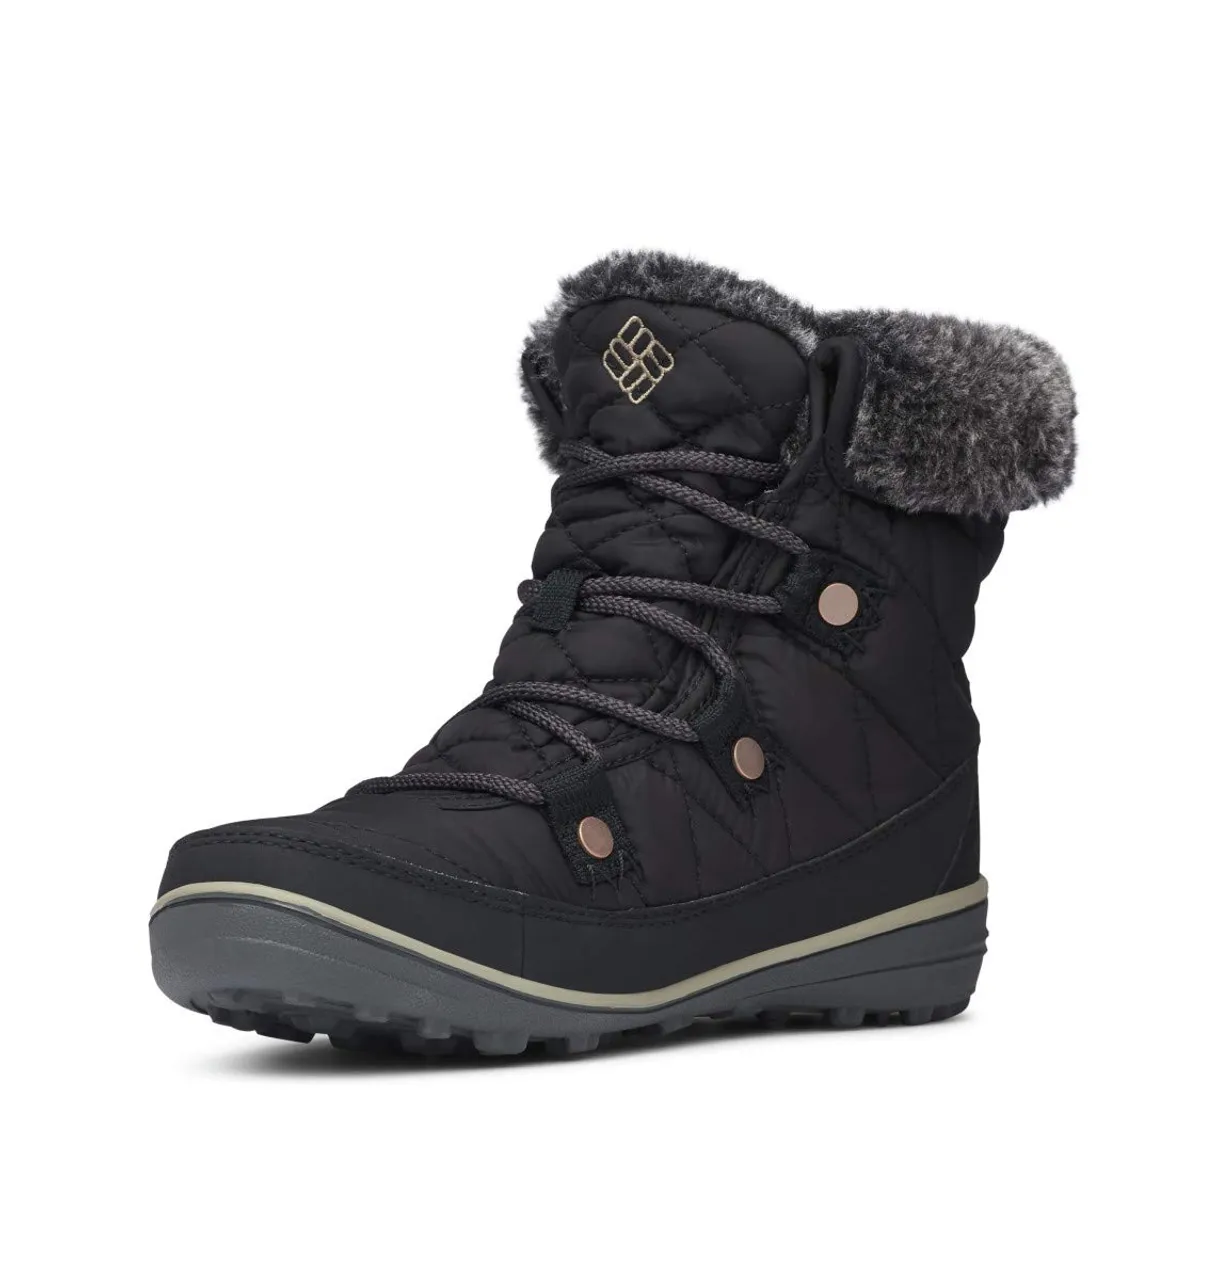 Columbia Heavenly Shorty Omni-heat Winter Boots